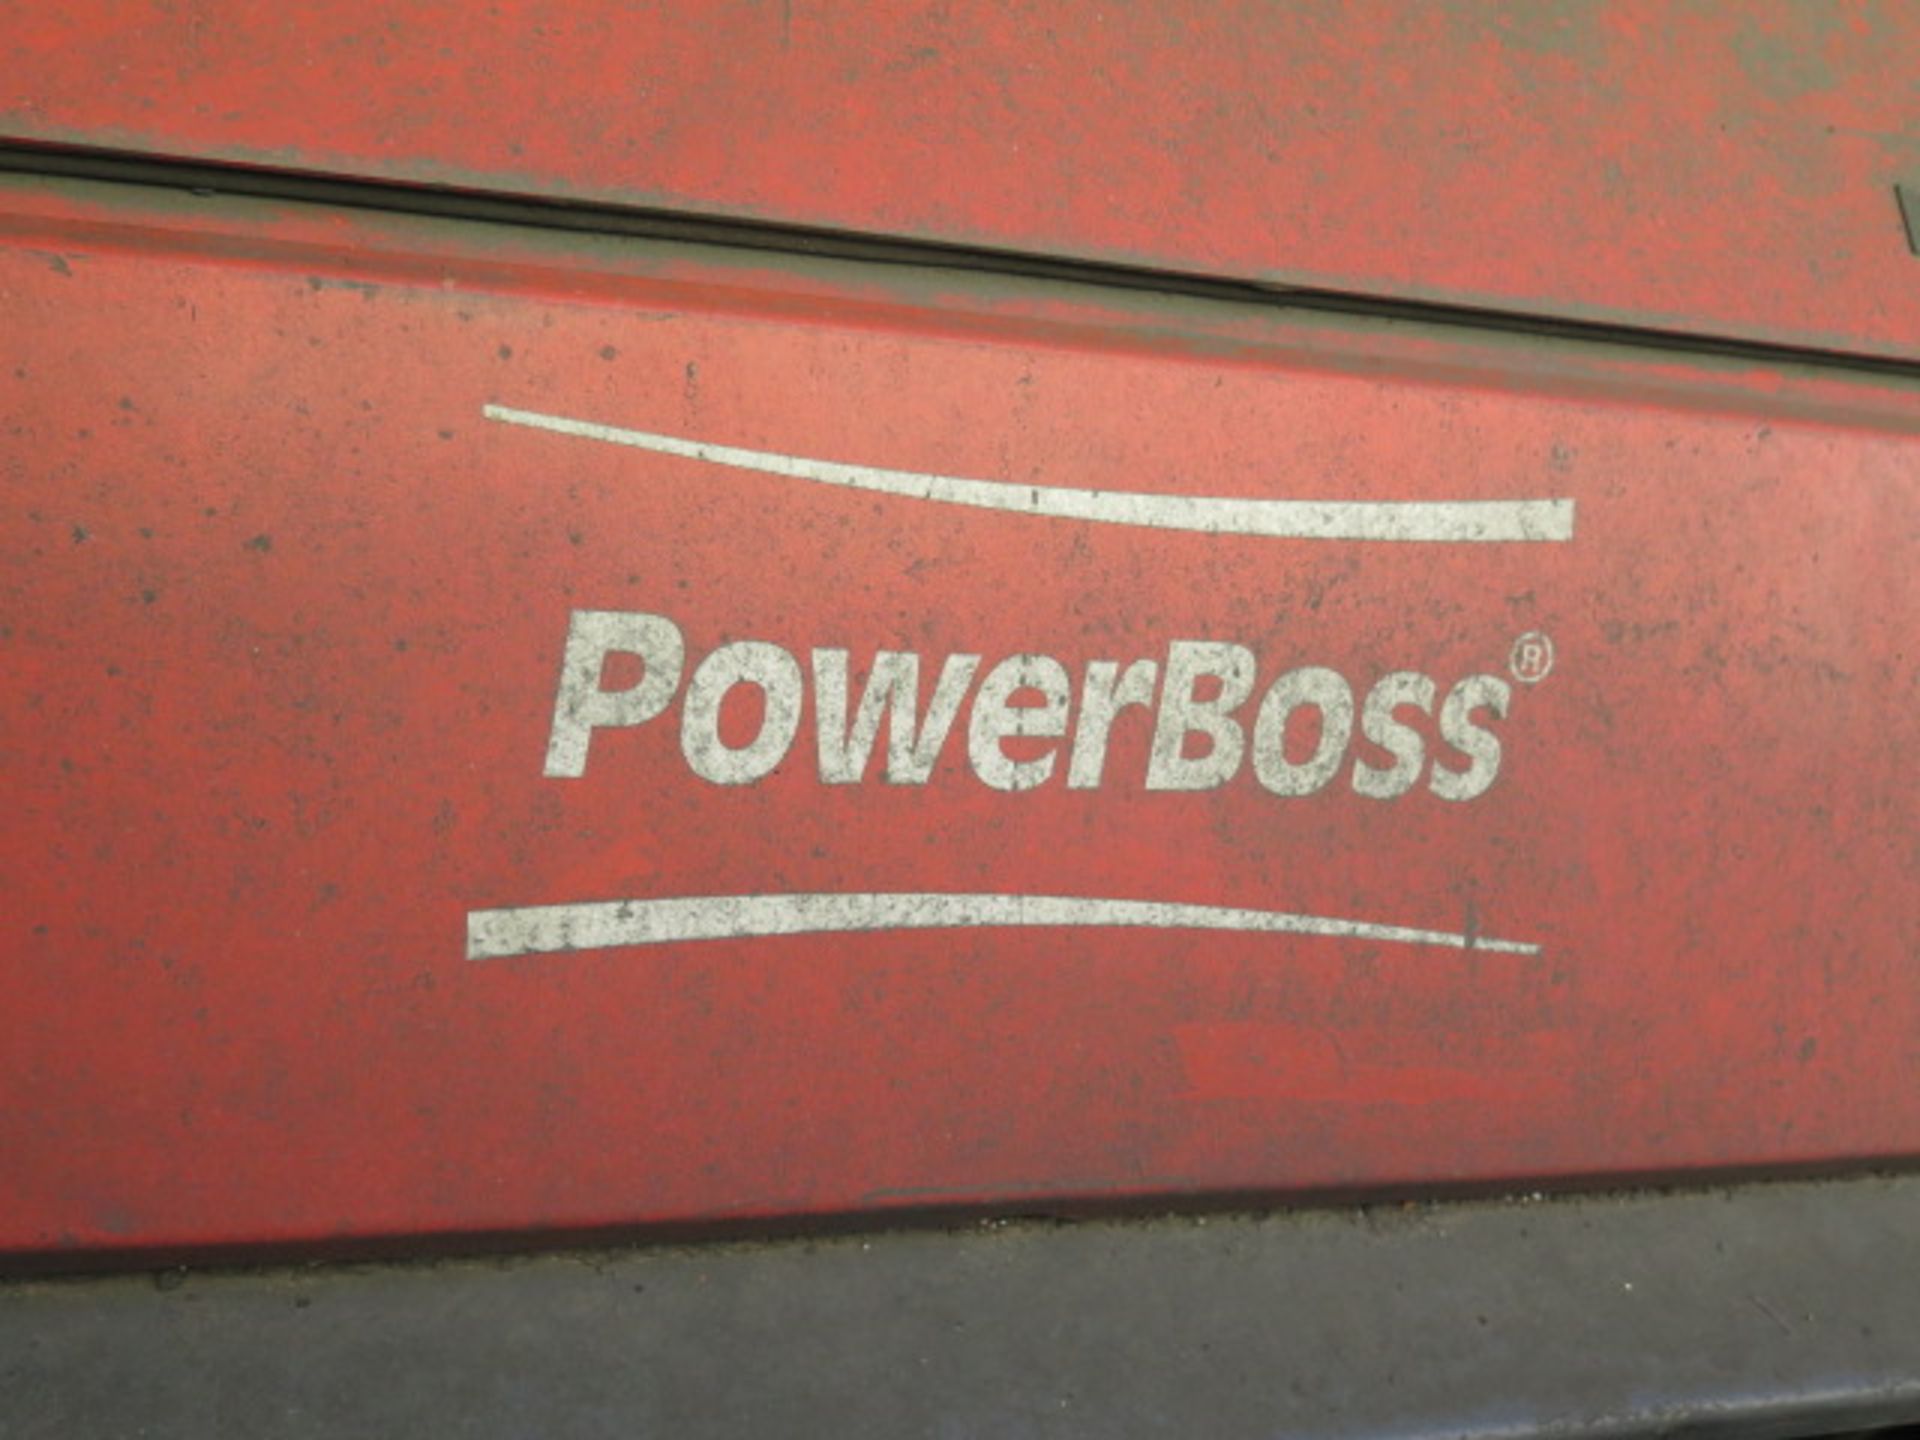 Minuteman PowerBoss mdl. 6X-LP Ride-In LPG Floor Sweeper s/n 18690100 (SOLD AS-IS - NO WARRANTY) - Image 10 of 11